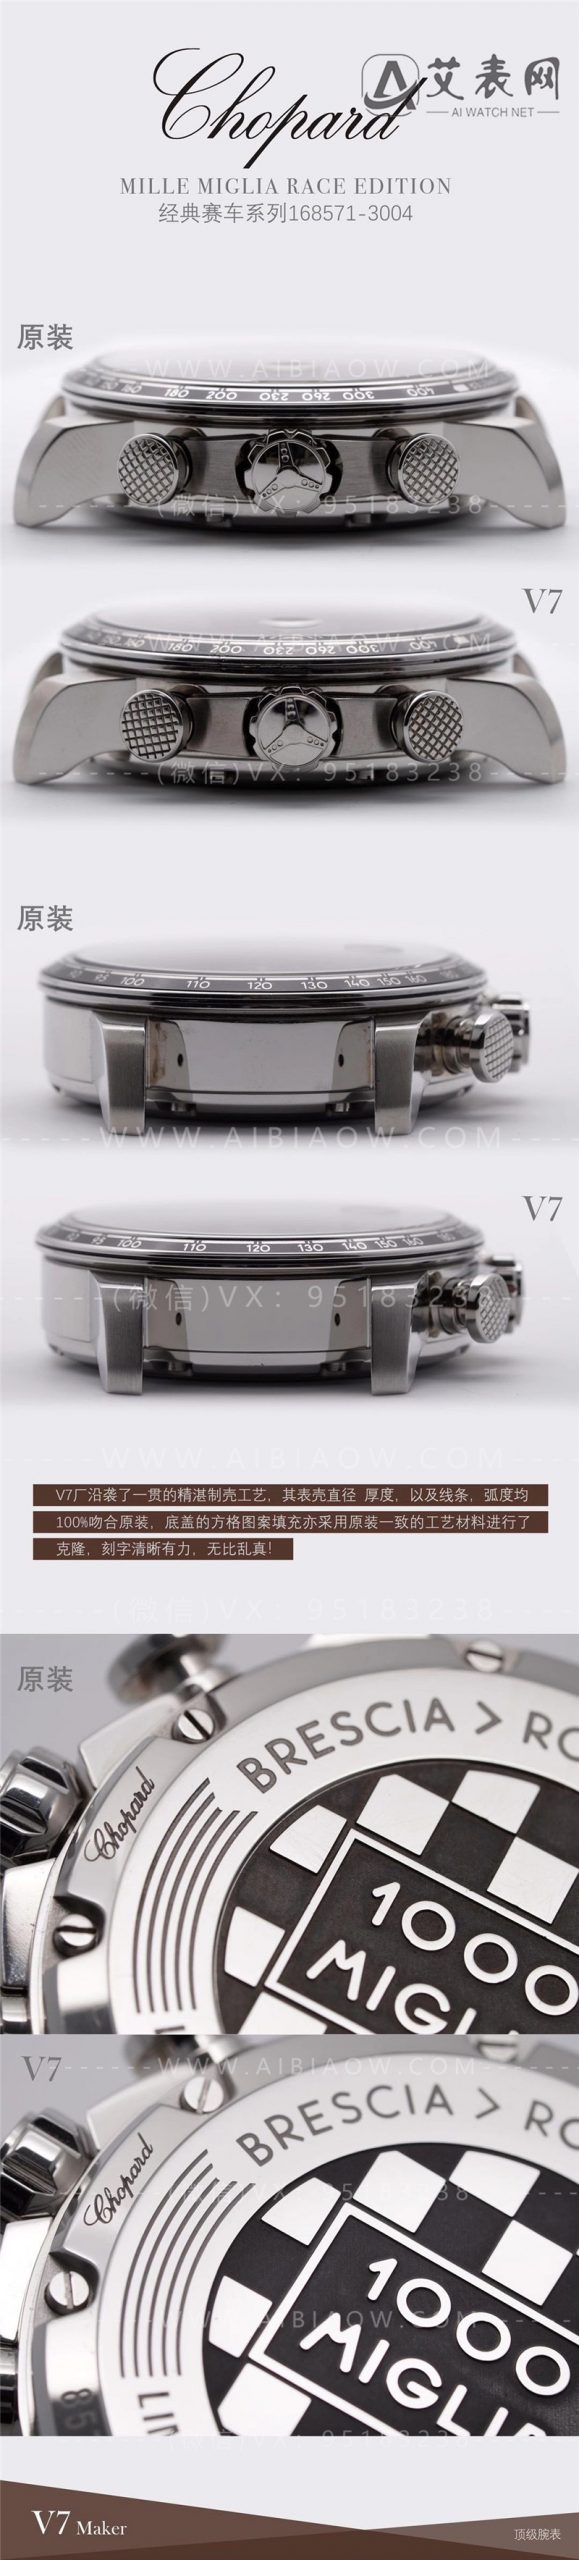 V7厂萧邦chopard经典赛车系列44mm男士腕表对比正品评测  第5张